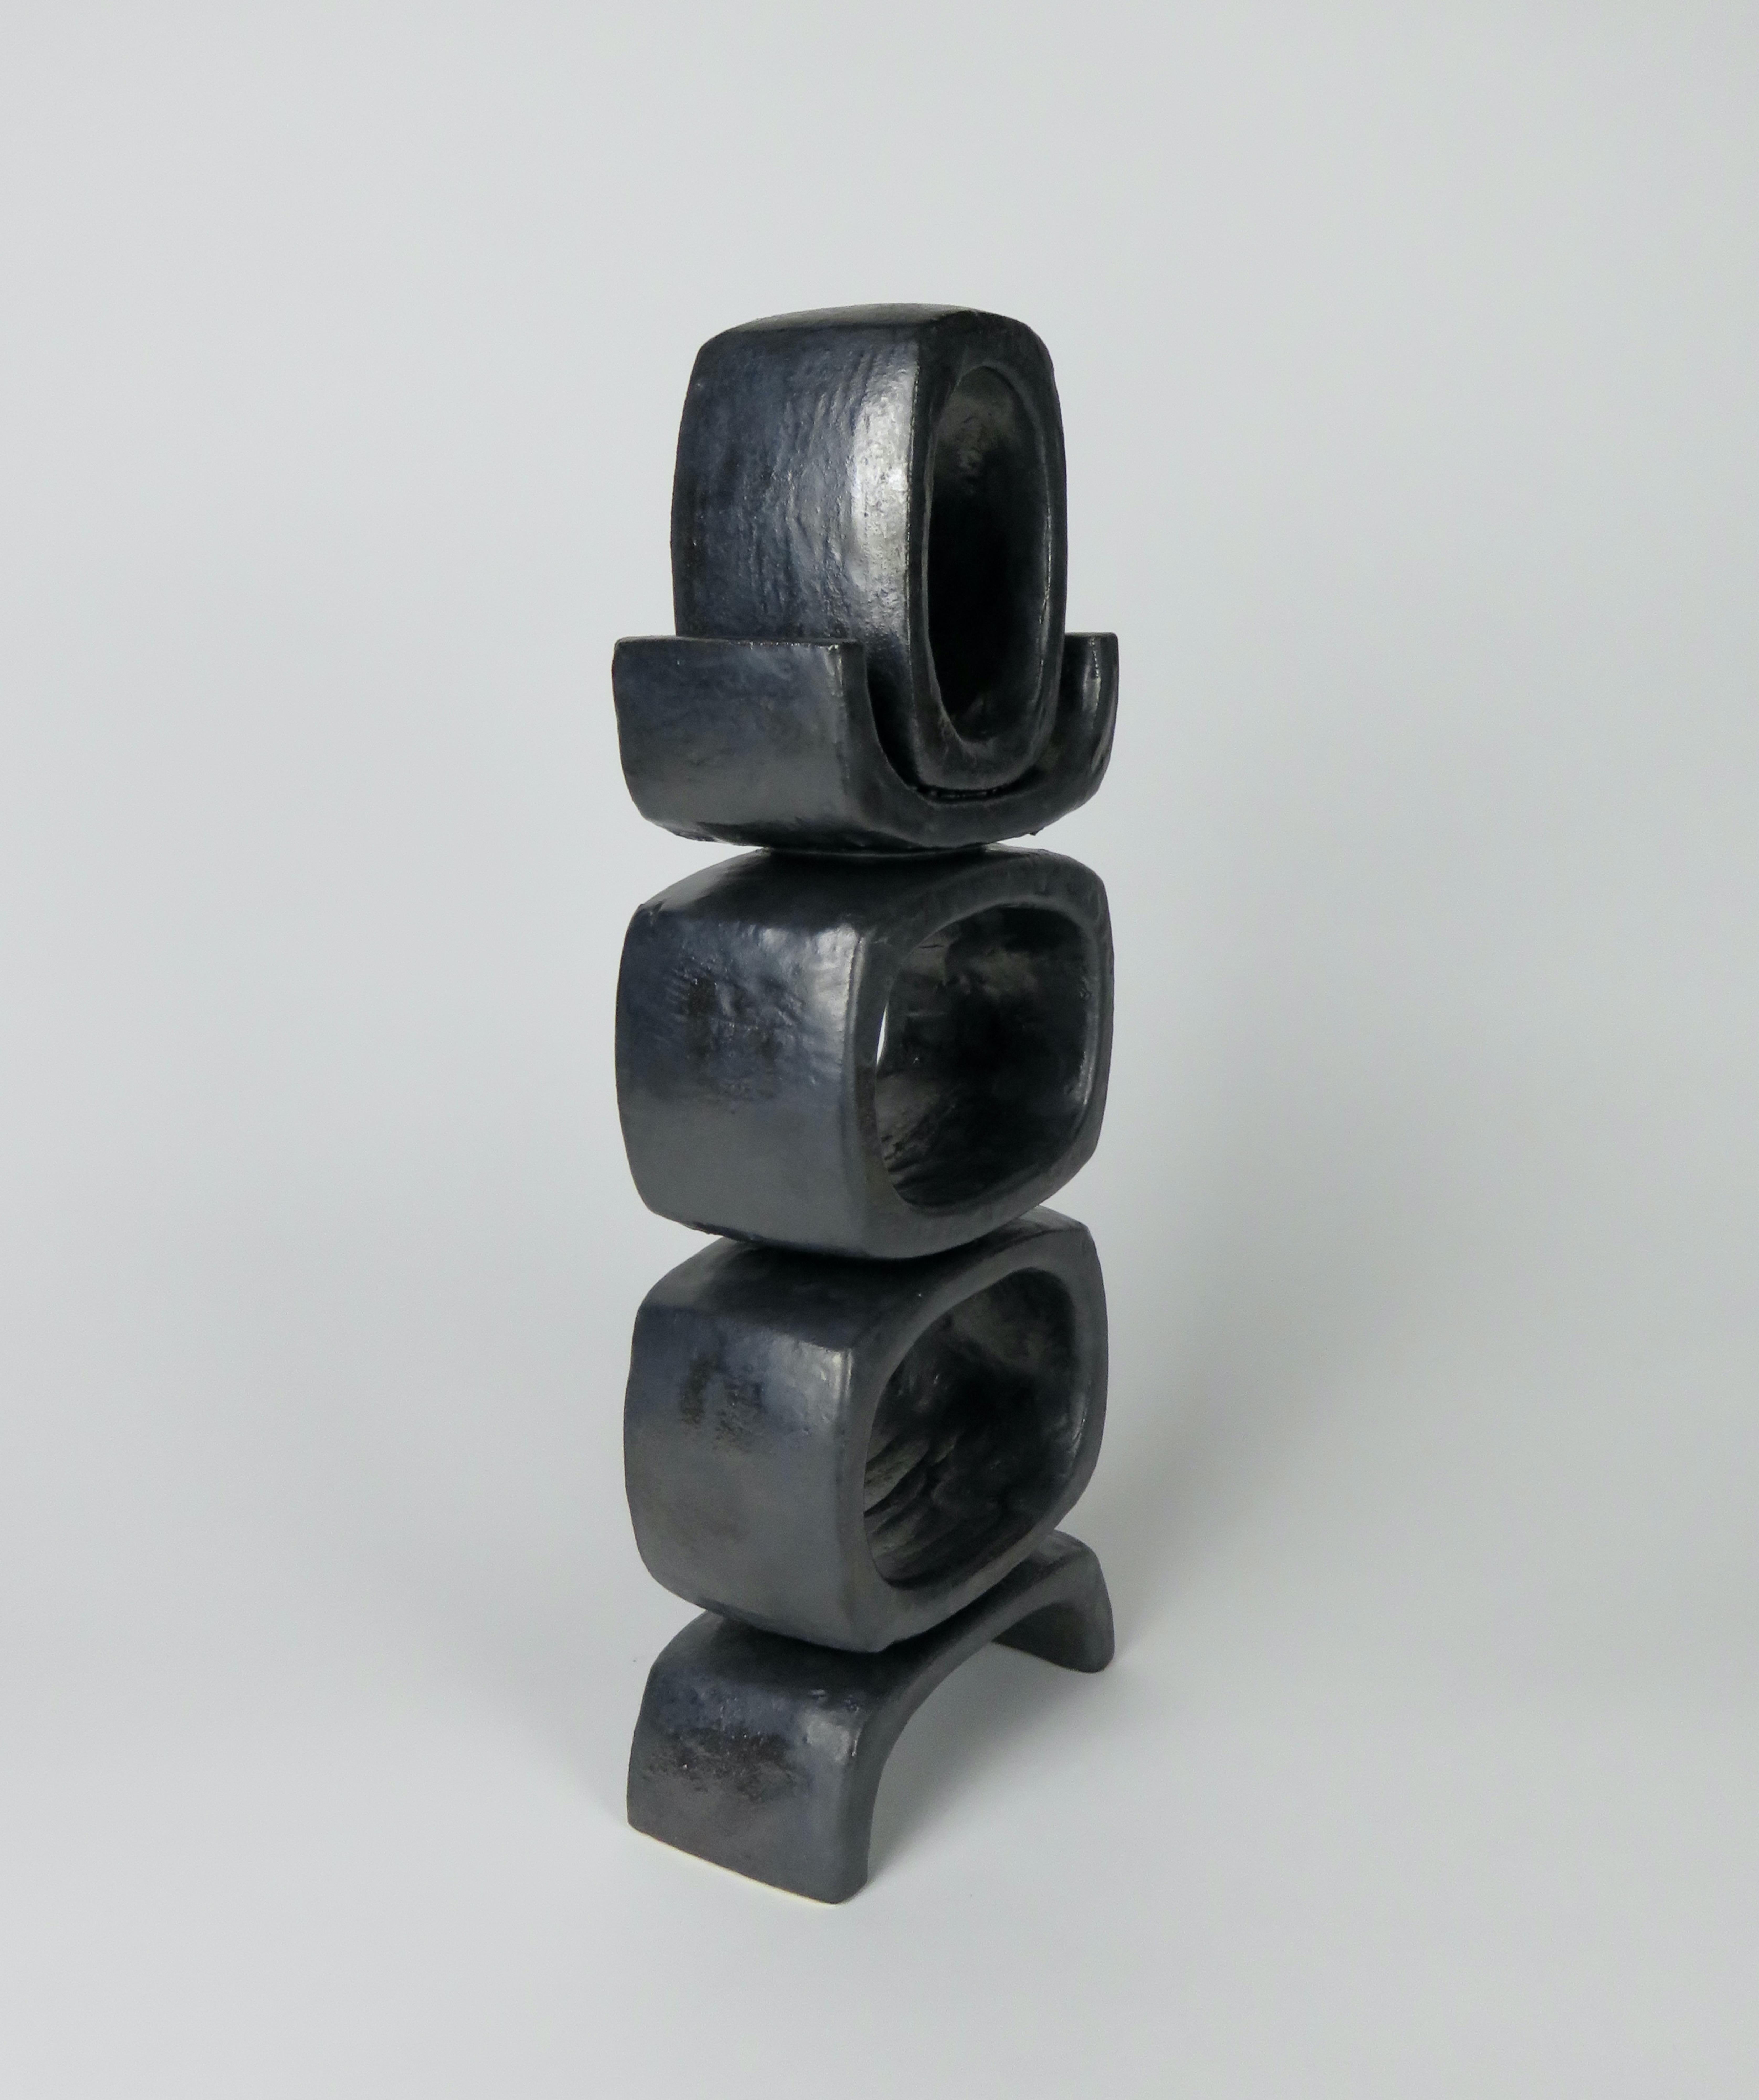 American 3 Rectangular Ovals, Short Angled Legs, Metallic Black-Glazed Clay Sculpture #1